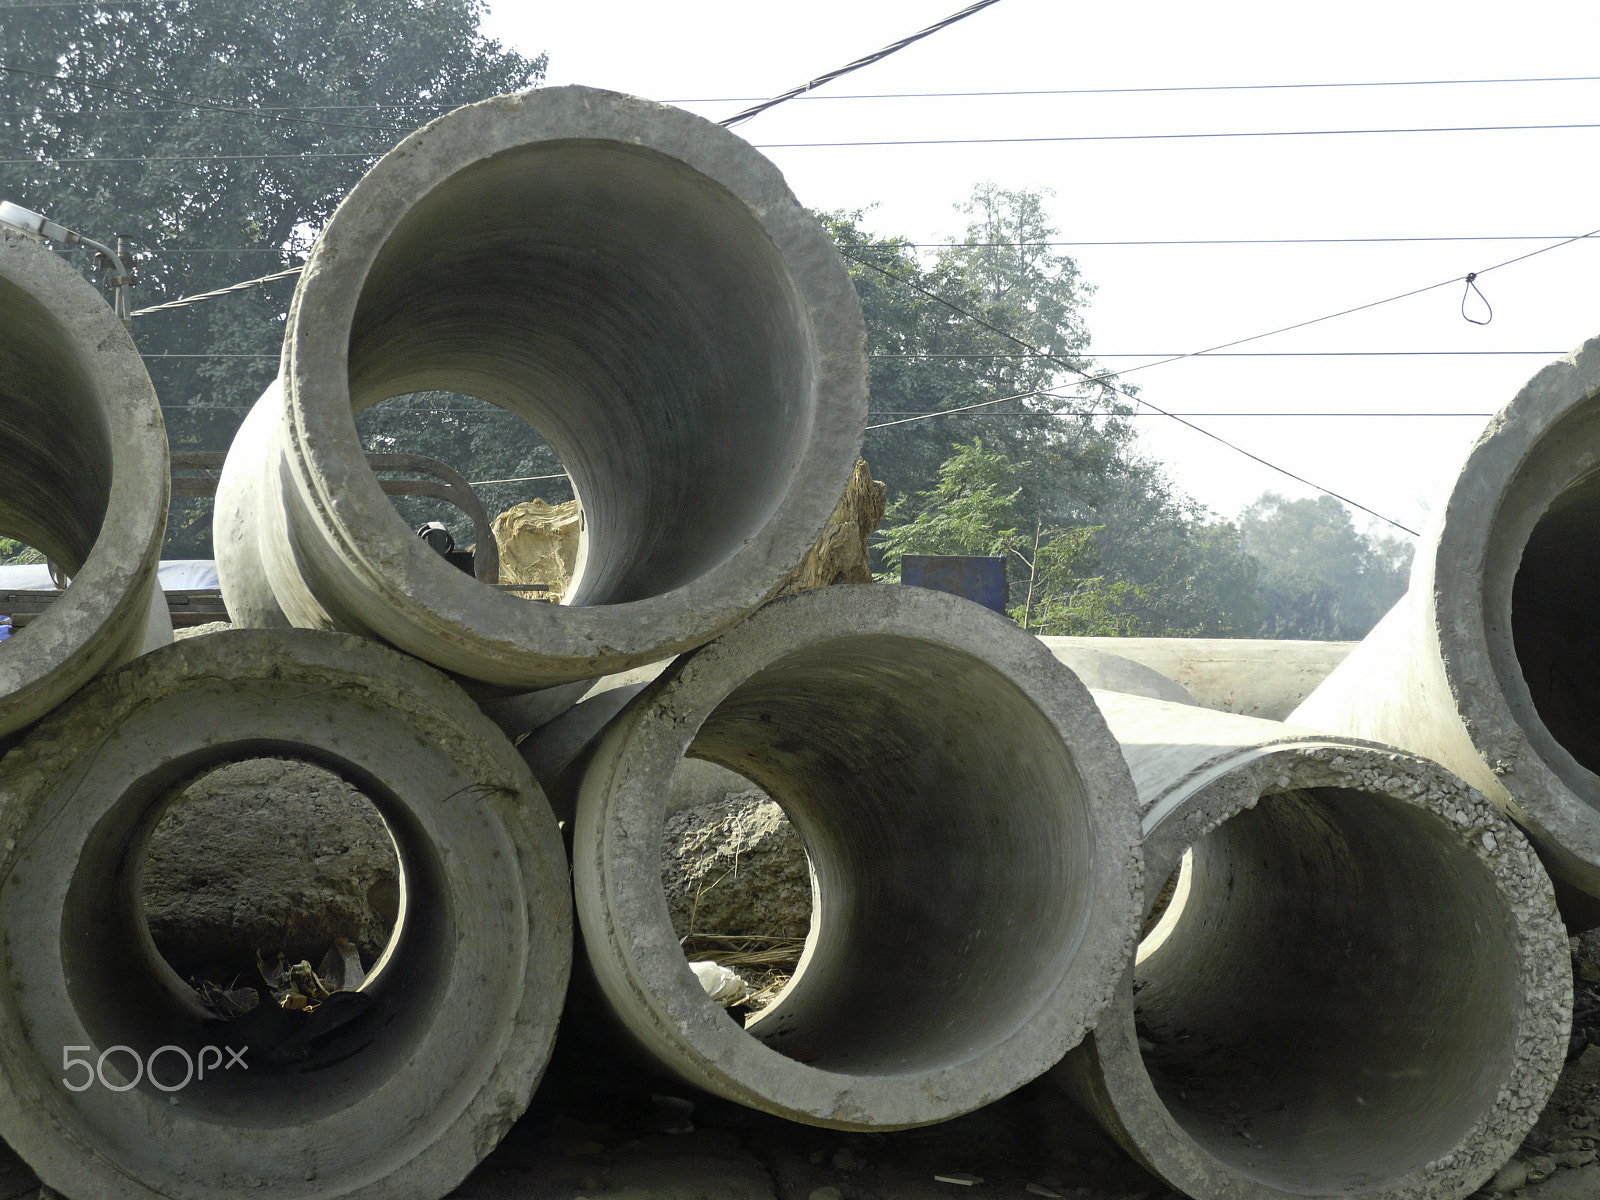 Panasonic DMC-FX100 sample photo. Large concrete sewage pipes piled, waiting for installation photography